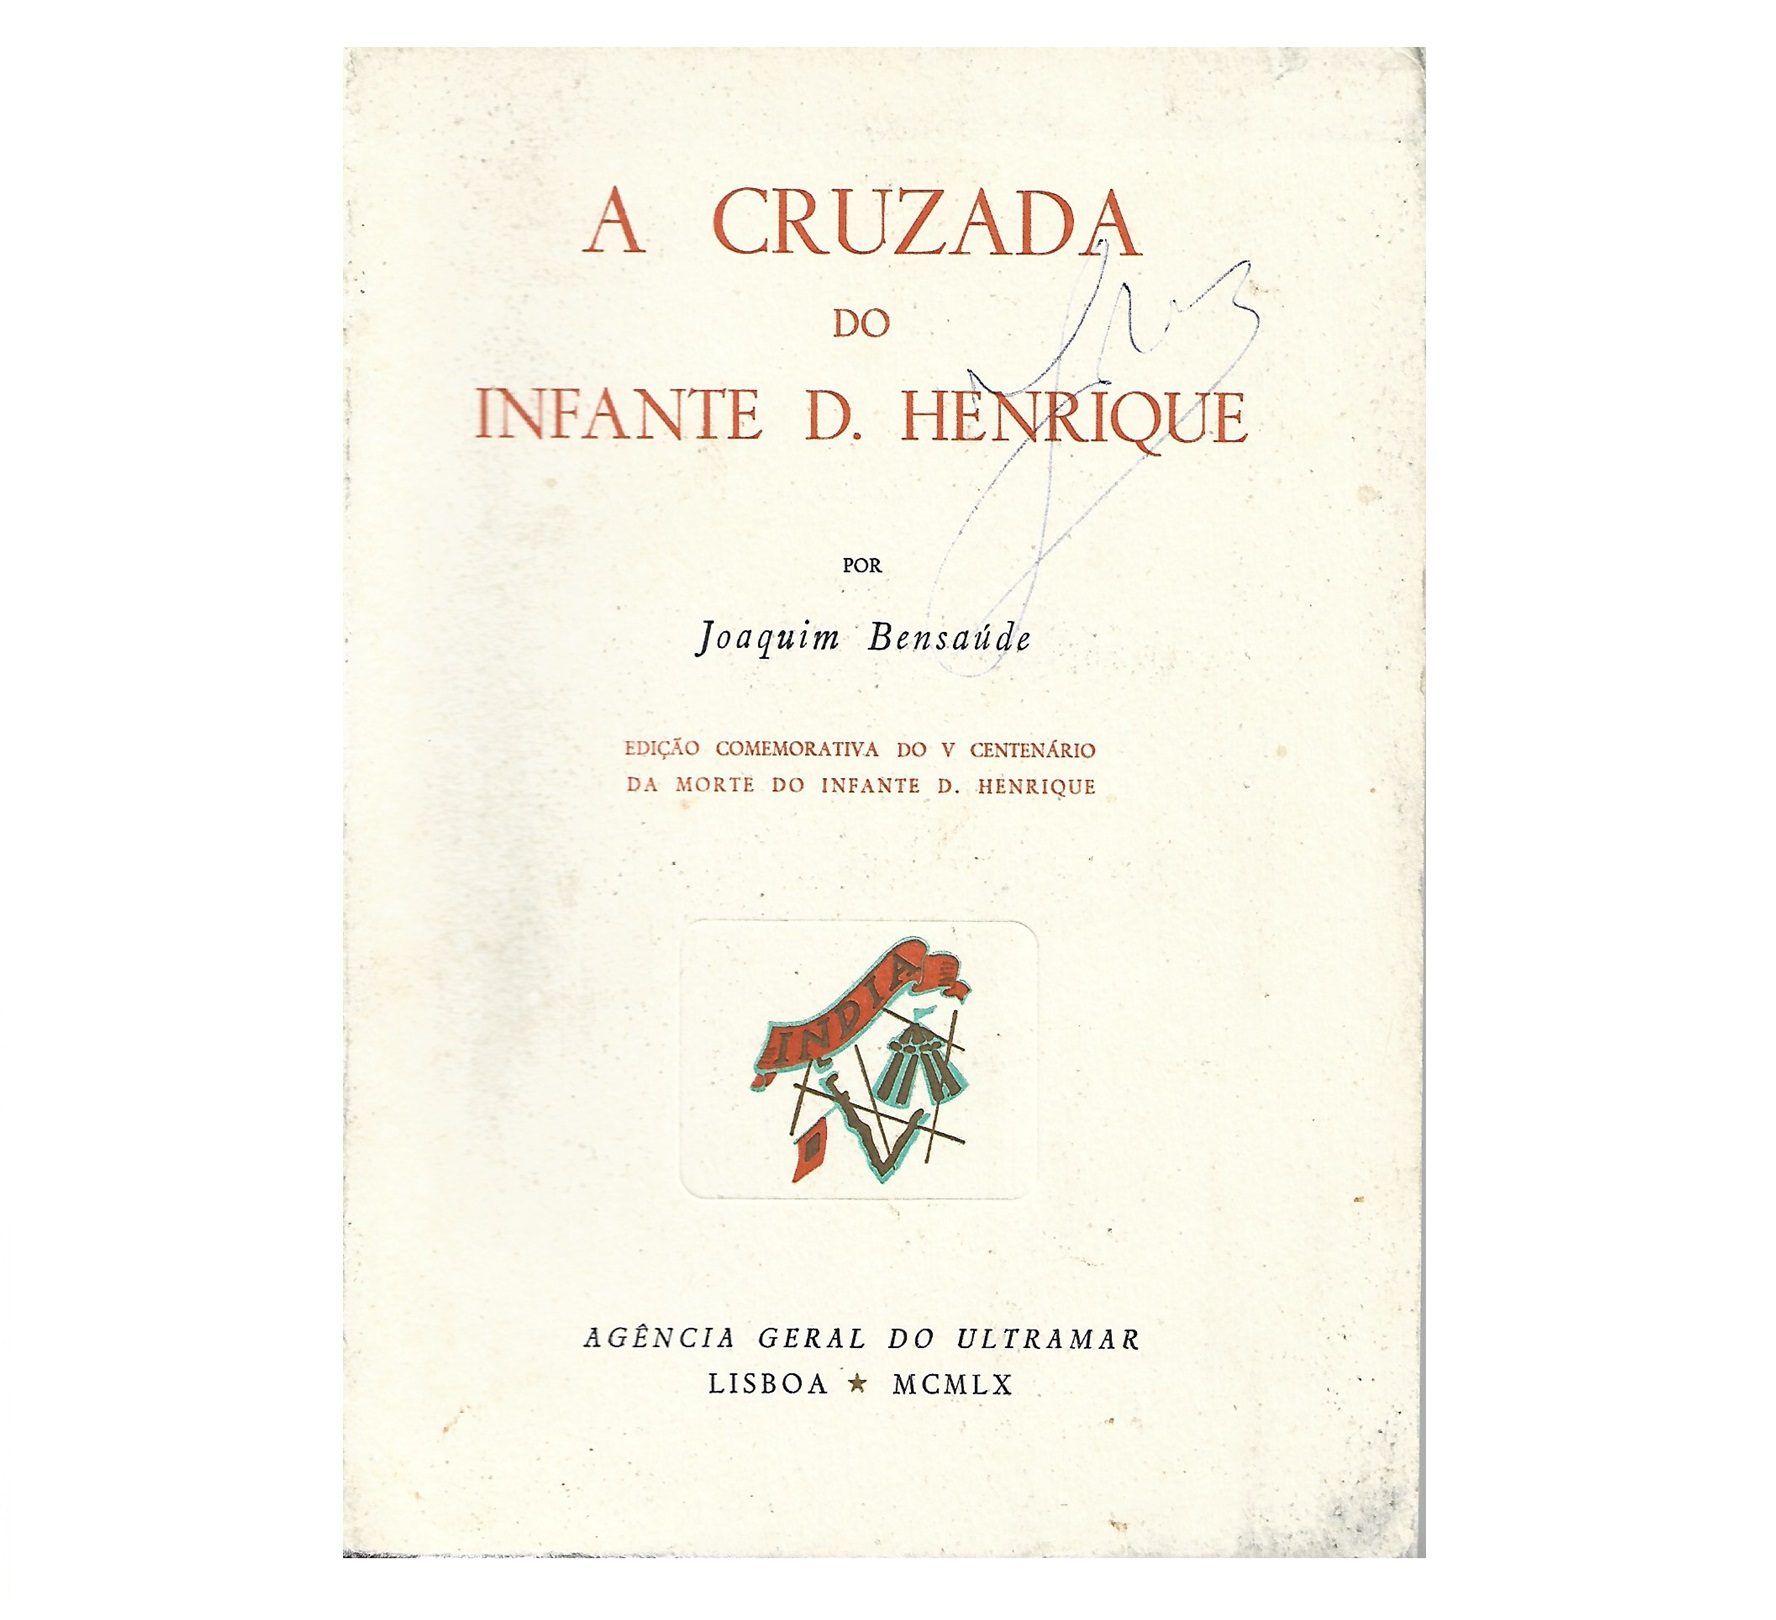 A CRUZADA DO INFANTE D. HENRIQUE